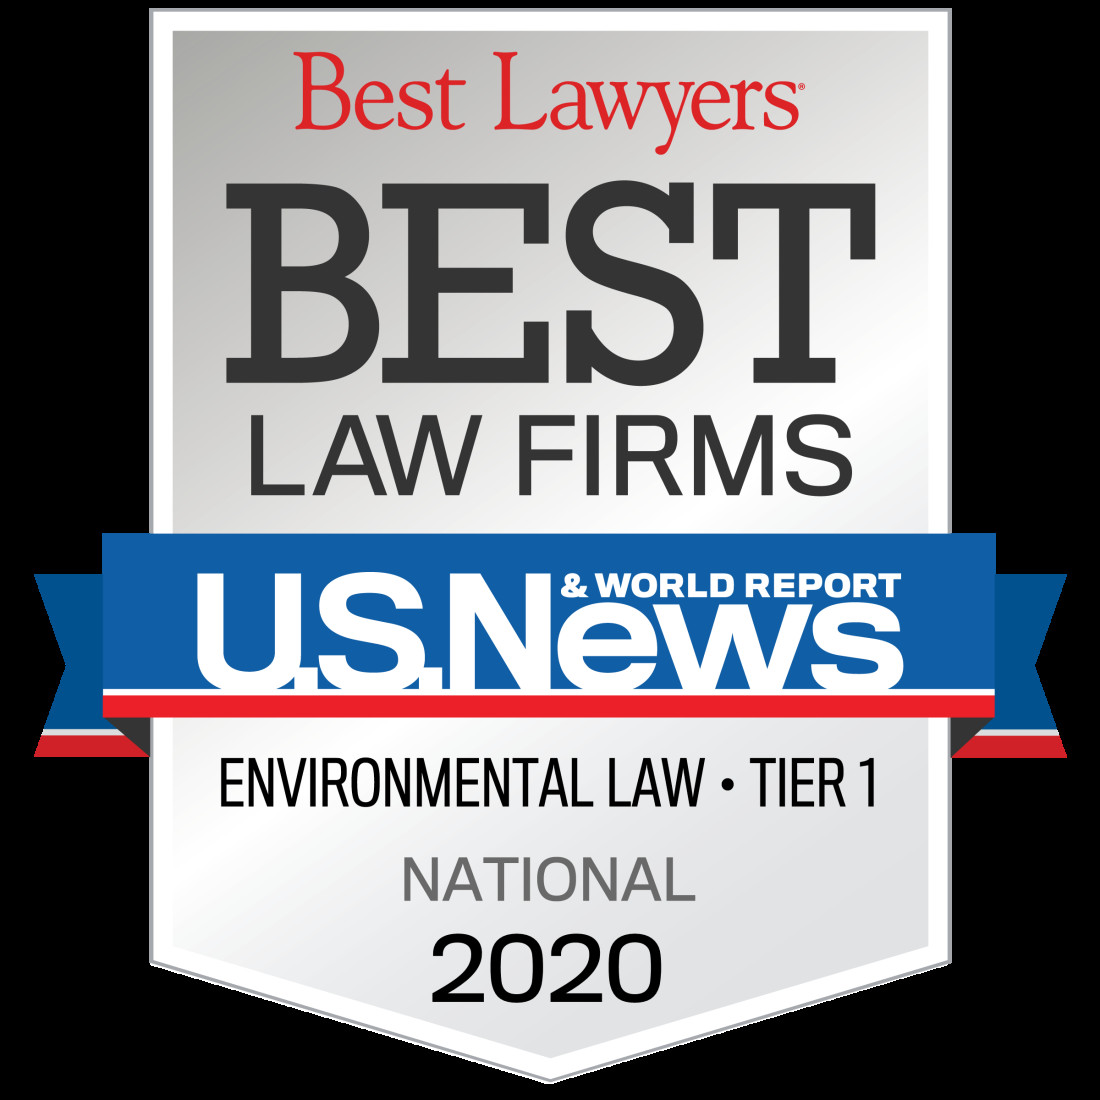 Best Law Firm 2021 - Tier 1 Environmental